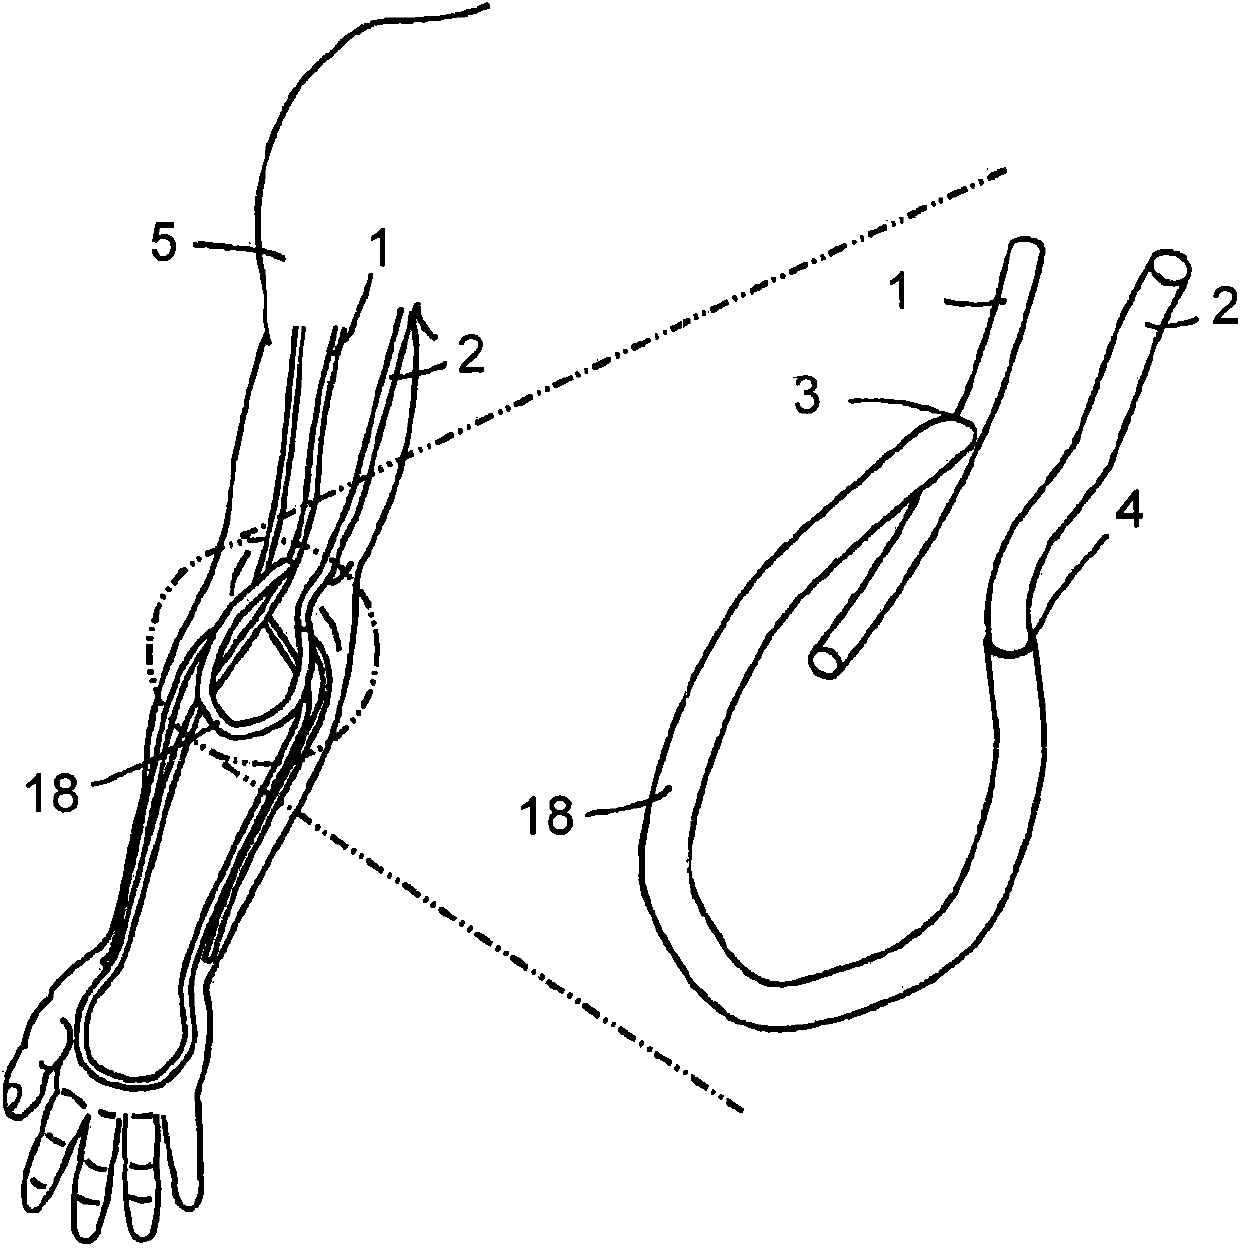 Hemodialysis arterio-venous graft with a ring-like diameter-adjustable device